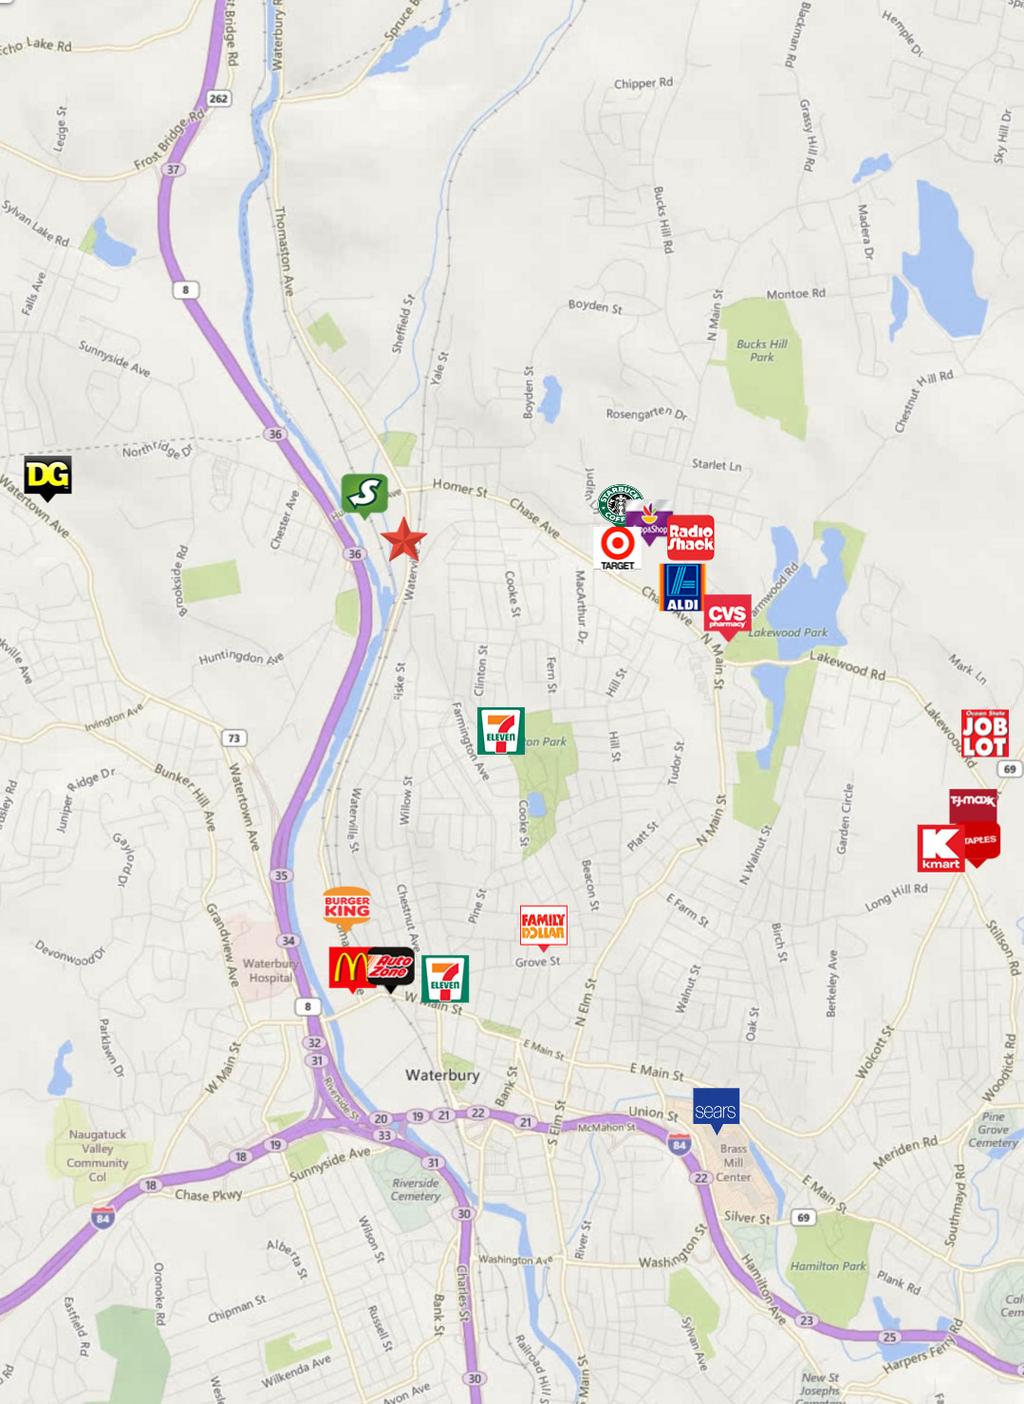 FOR SALE Neighborhood Map Waterbury, CT 06704 NEAR TOP NATIONAL RETAILERS INCLUDING: Retailer Distance (miles) Subway.5 Target 1.1 Starbucks 1.1 McDonald s 1.2 RadioShack 1.2 Aldi 1.4 7-Eleven 1.